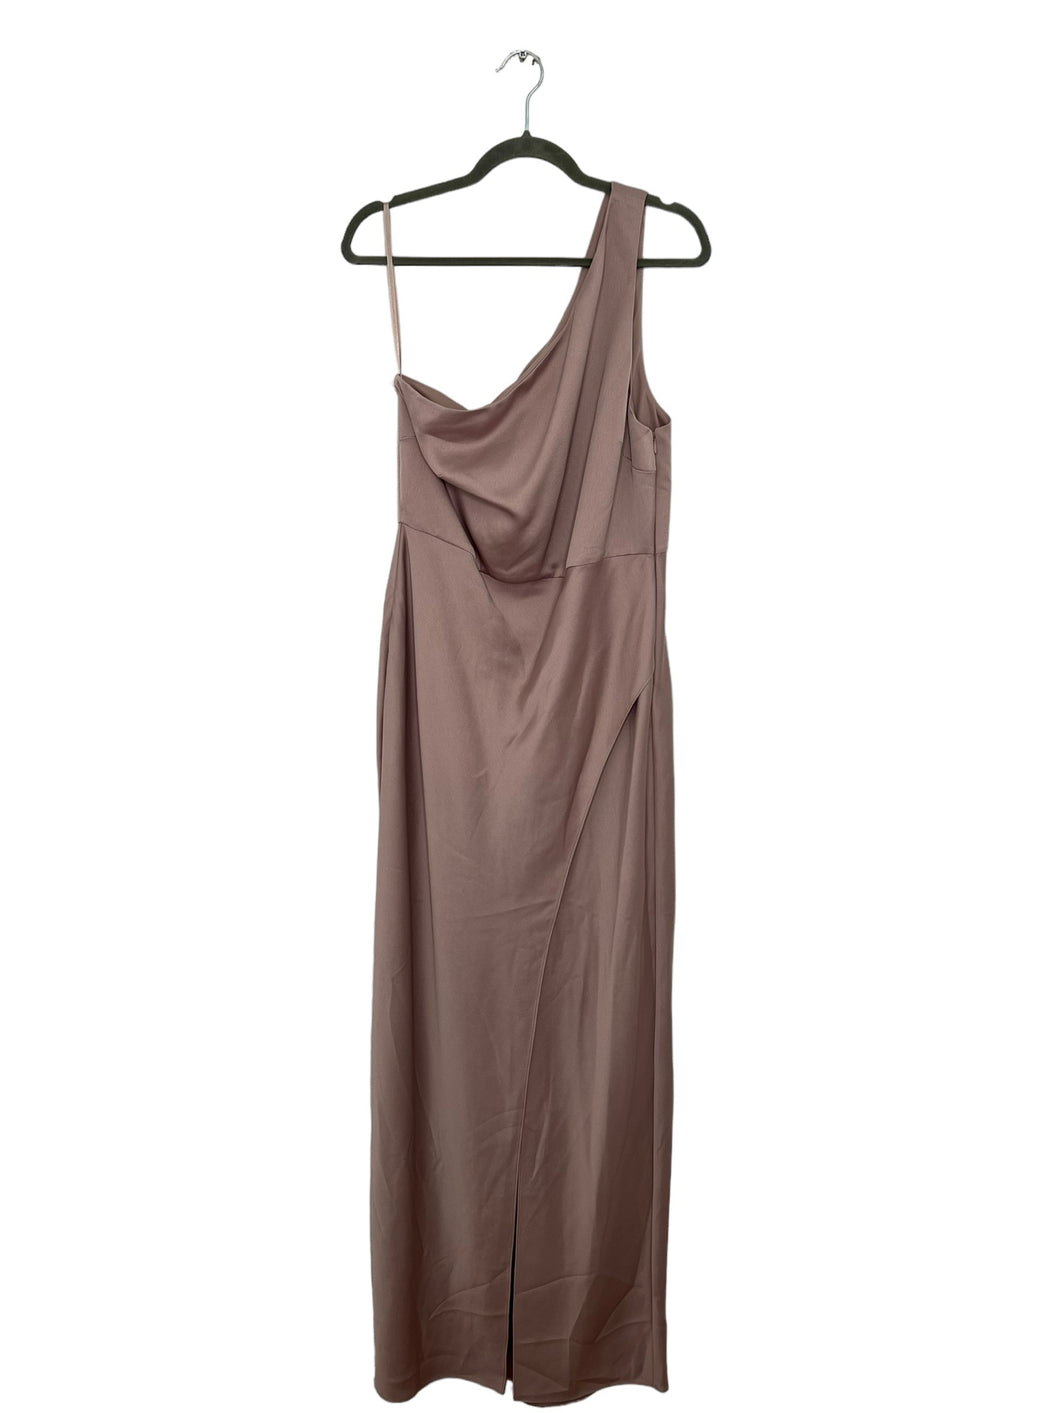 Size 14 Beige Dress- Ladies